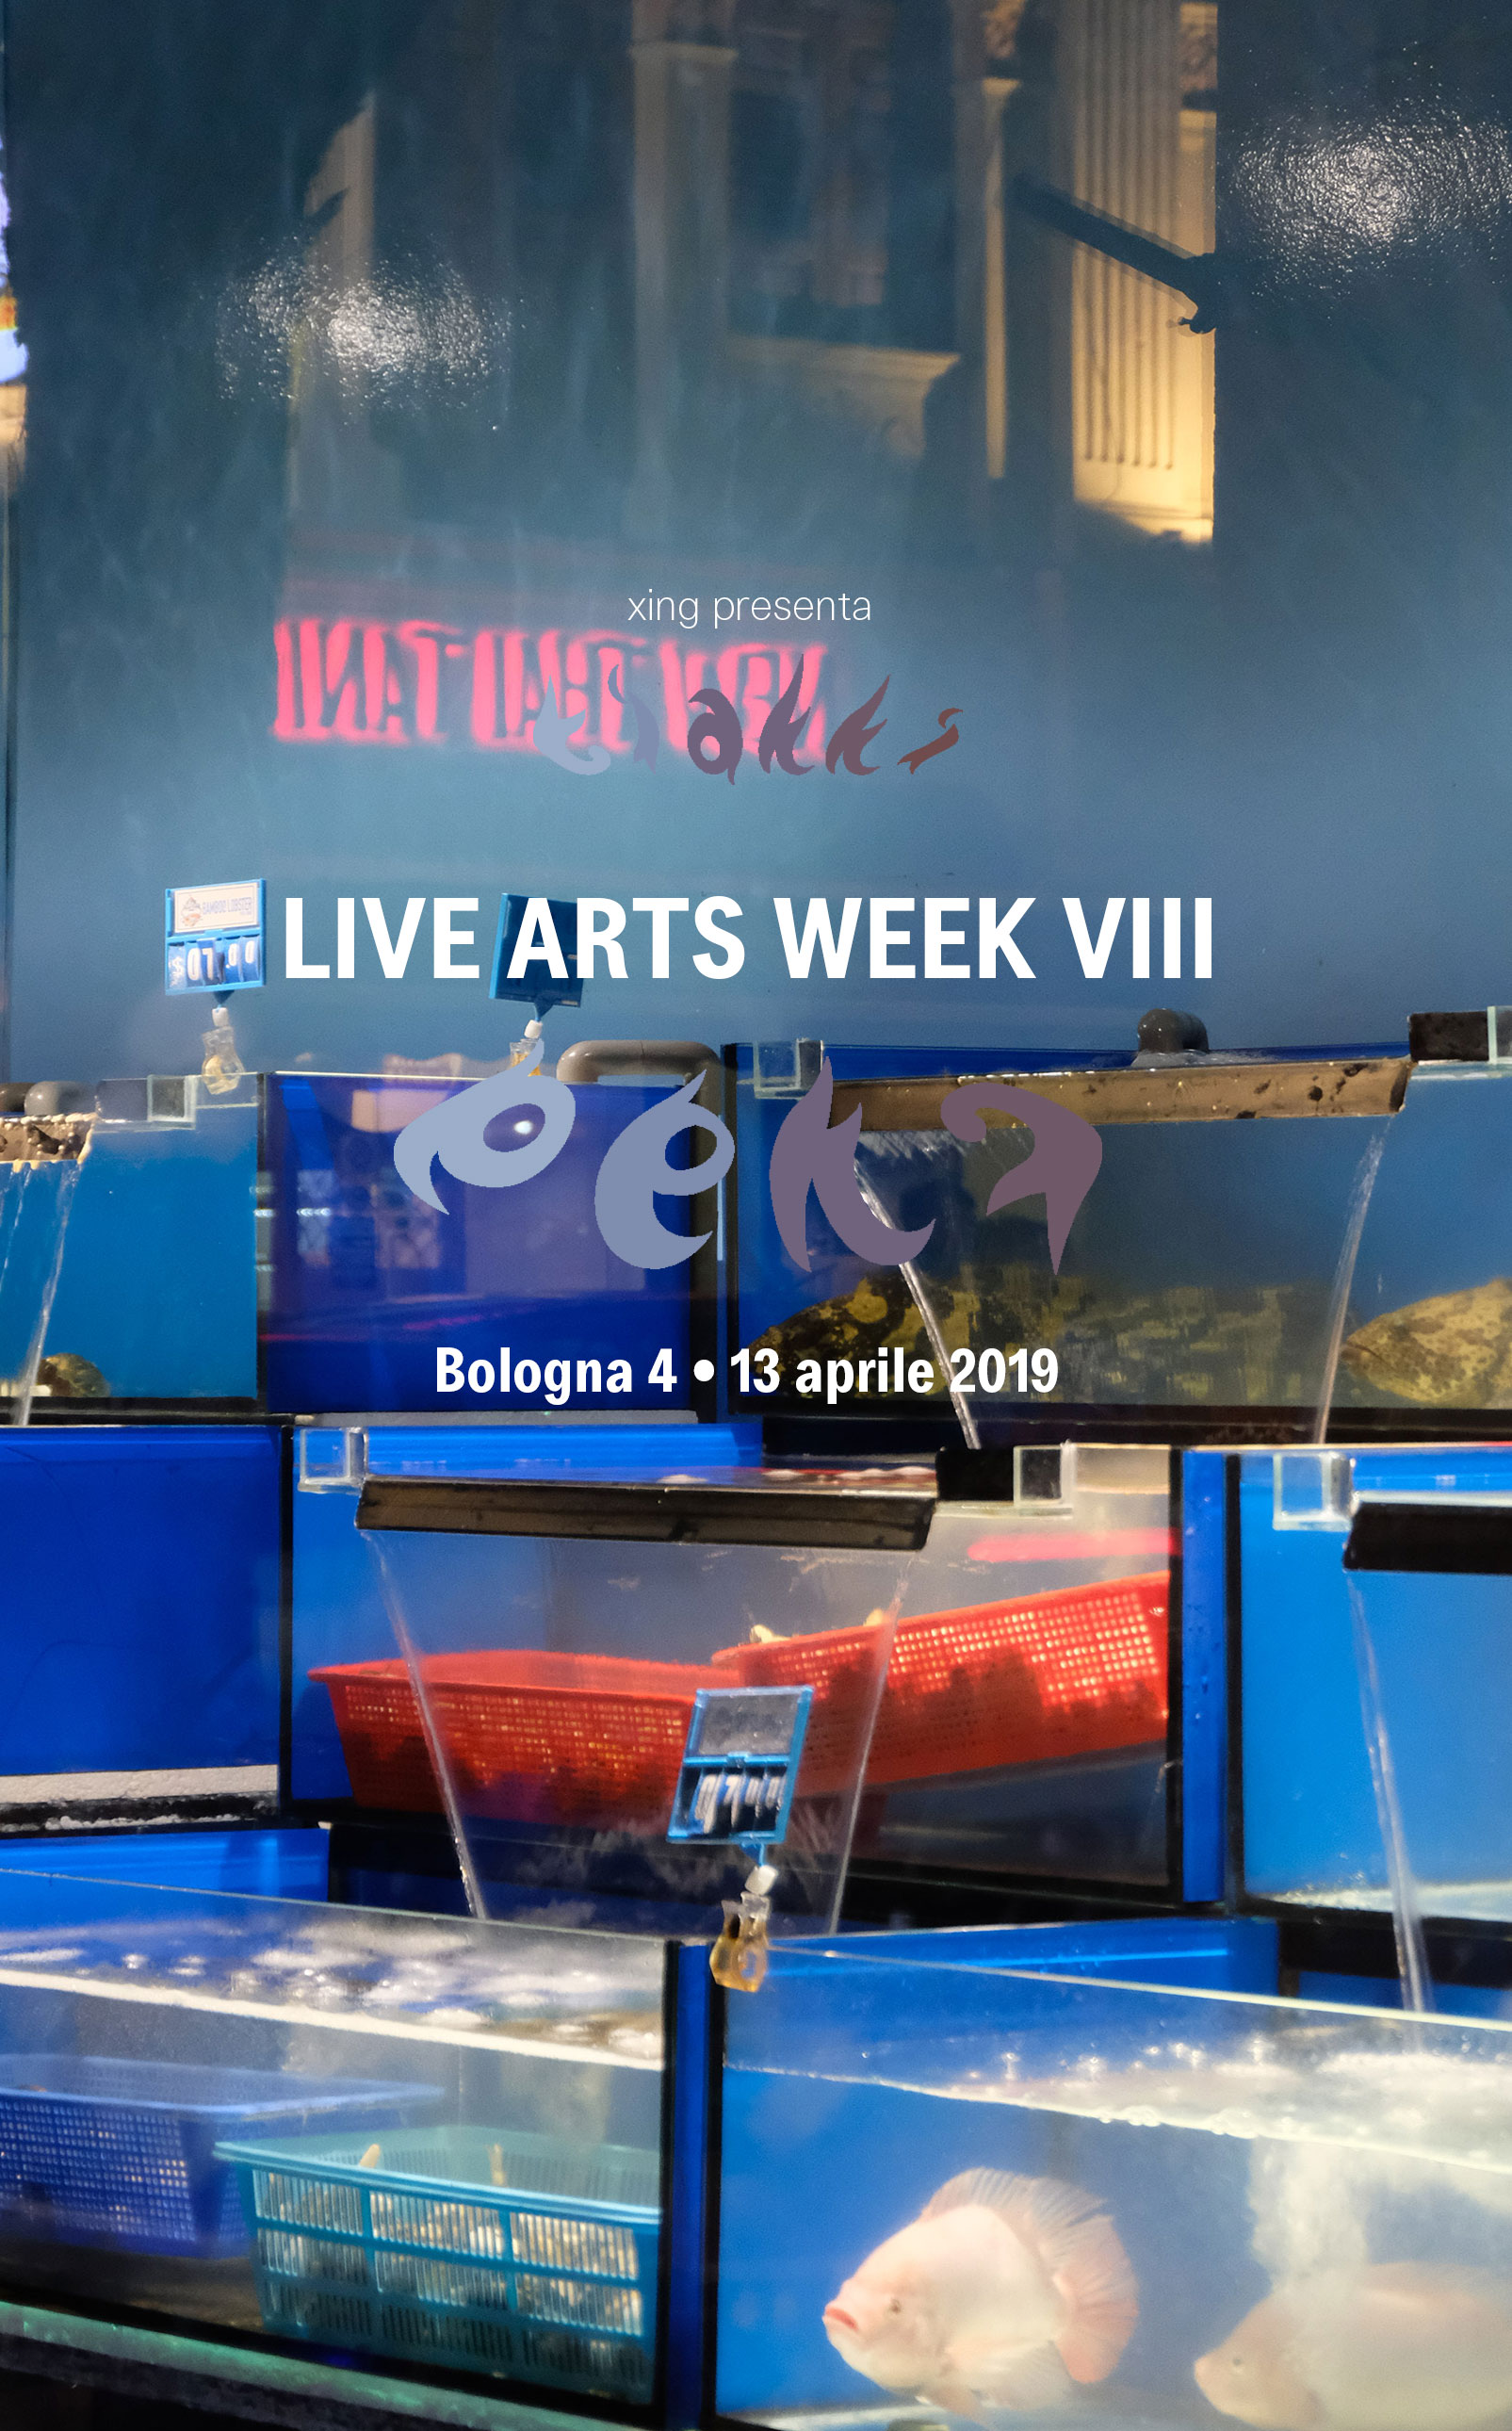 LiveArtsWeek Bologna Gianni Peng VIII Background Image 2019